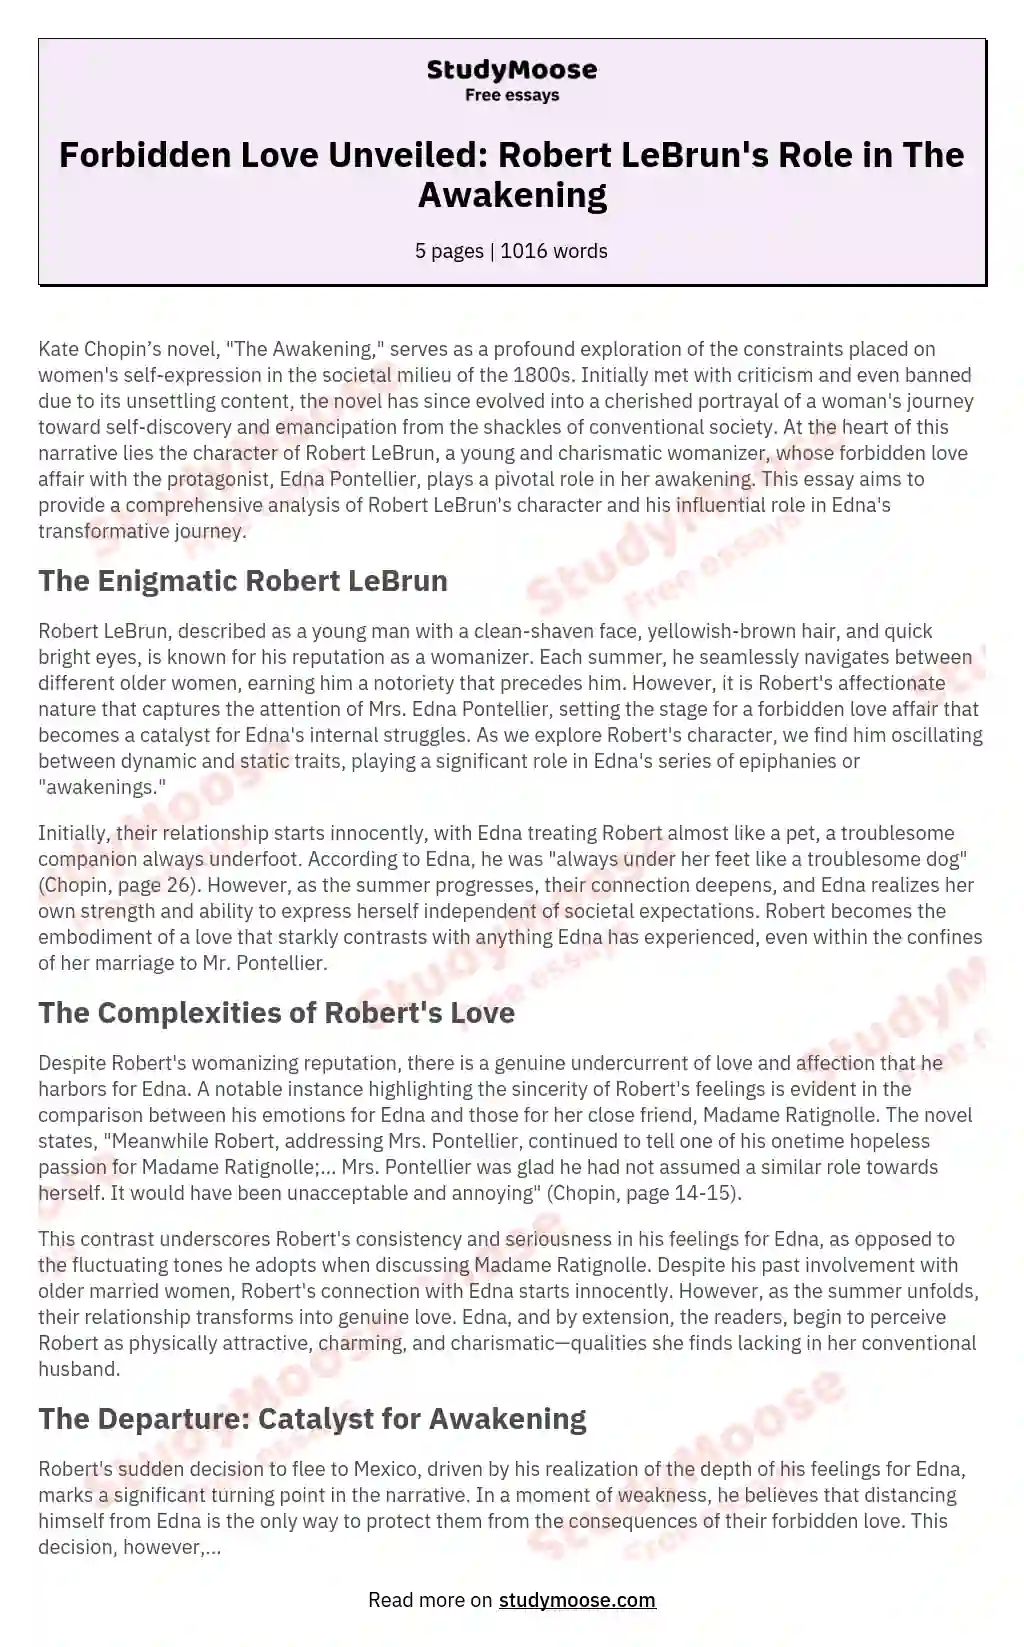 Forbidden Love Unveiled: Robert LeBrun's Role in The Awakening essay